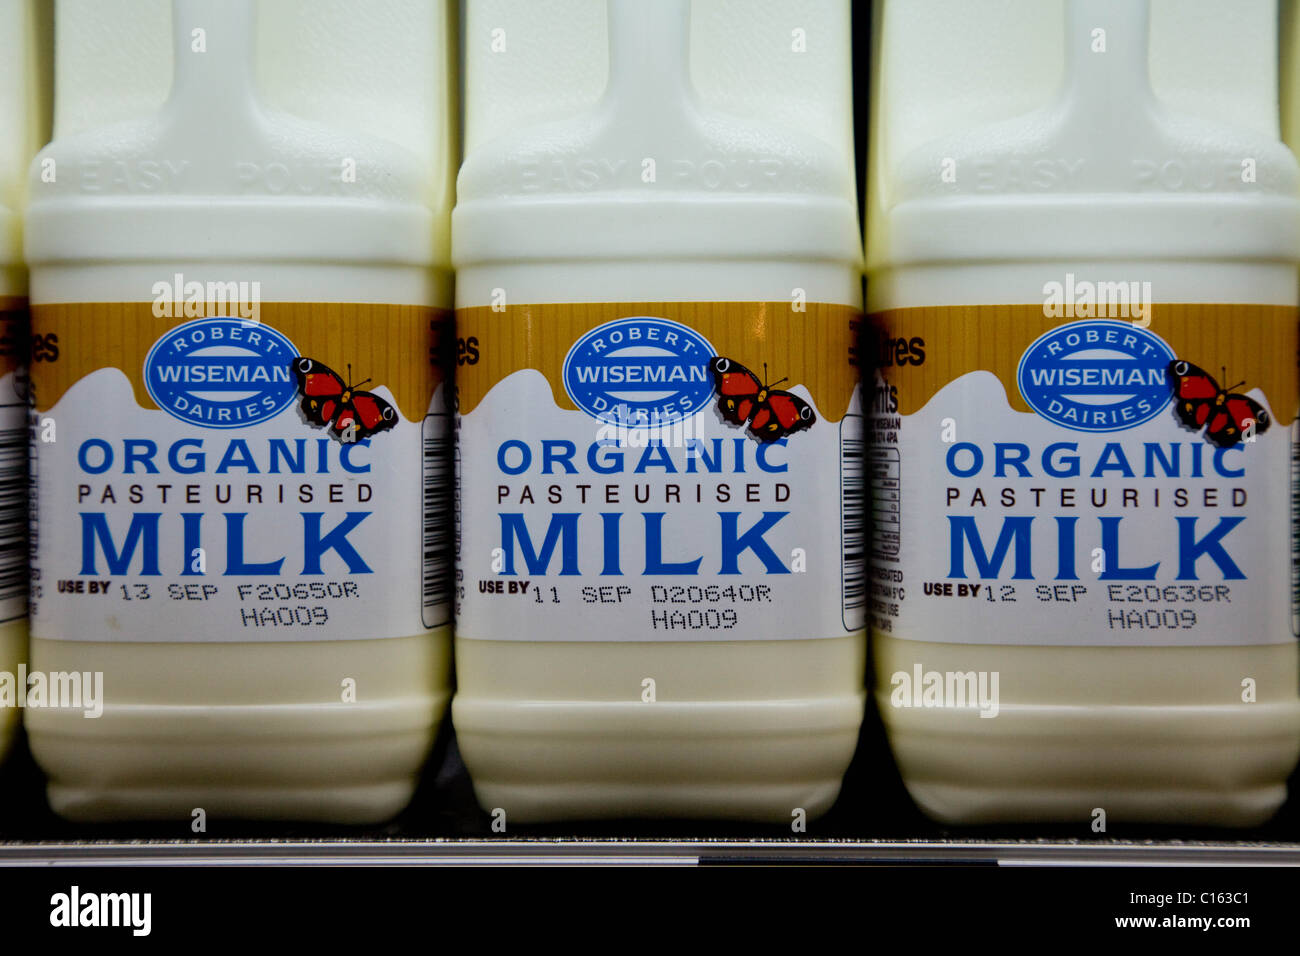 Robert Wiseman Organic Pasteurised Milk Stock Photo